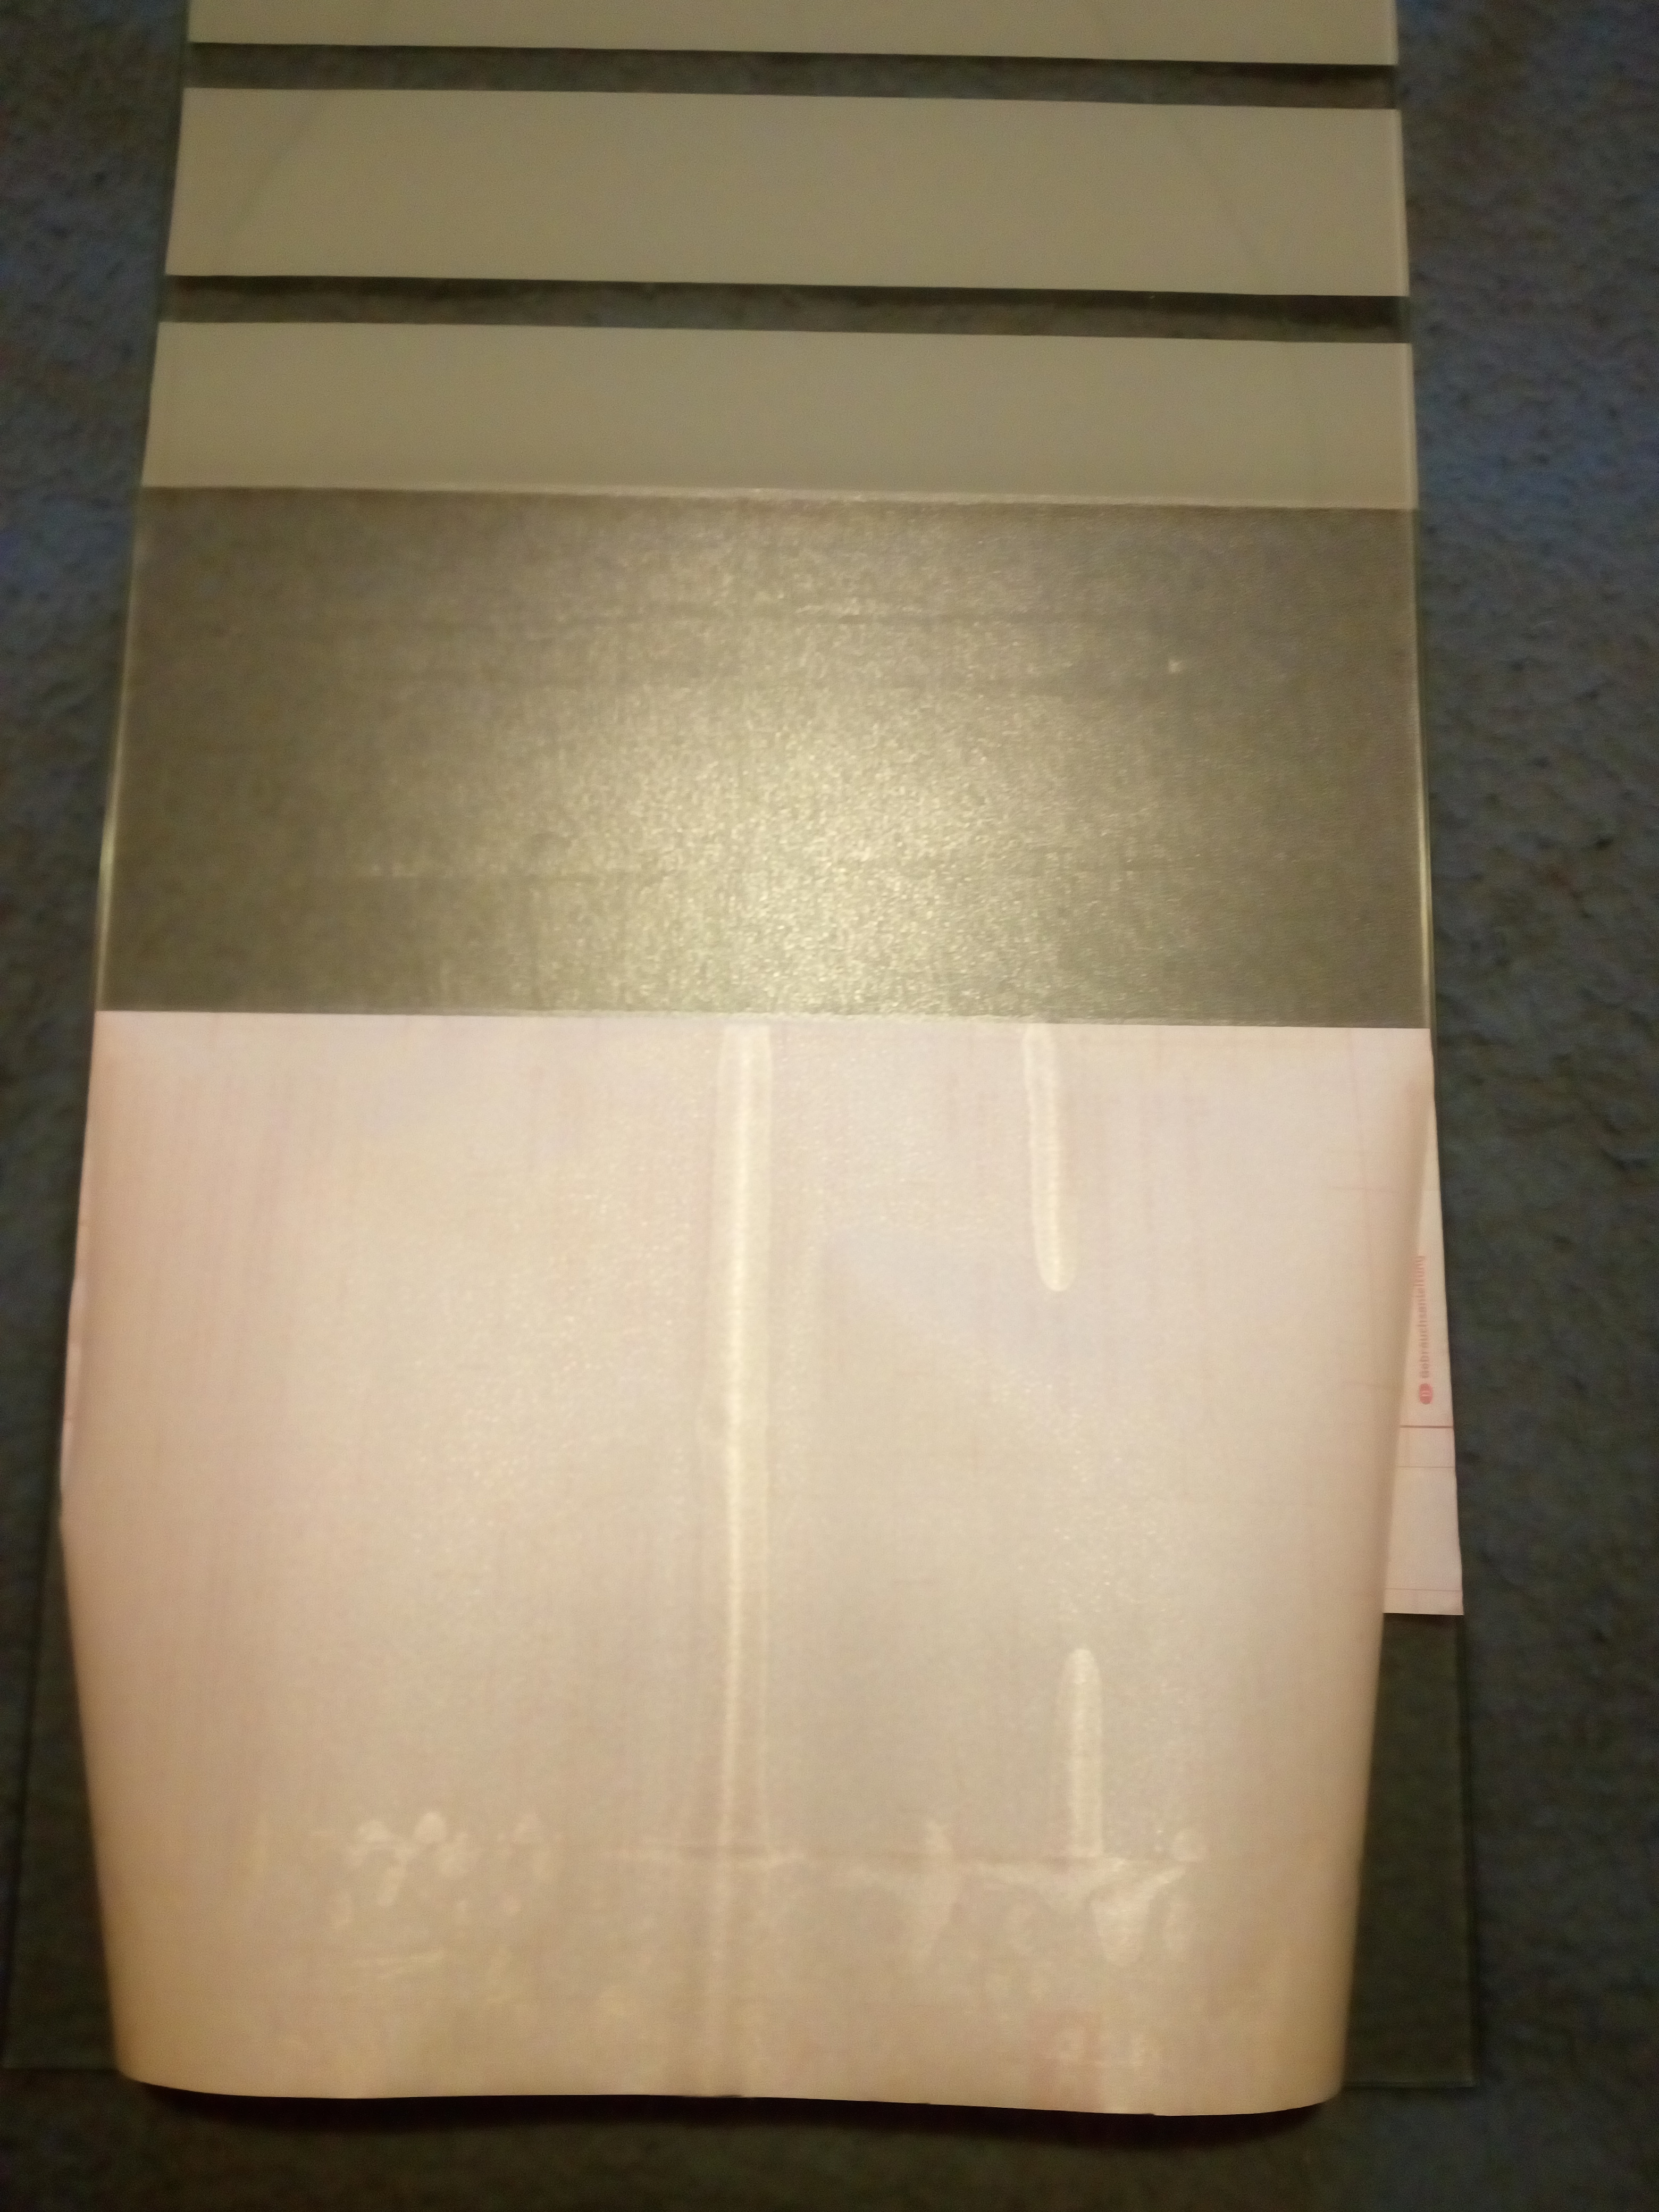   Fagyos Ablak Öntapadós Standard Ablakfólia (Milky) (15 m x 90 cm)
